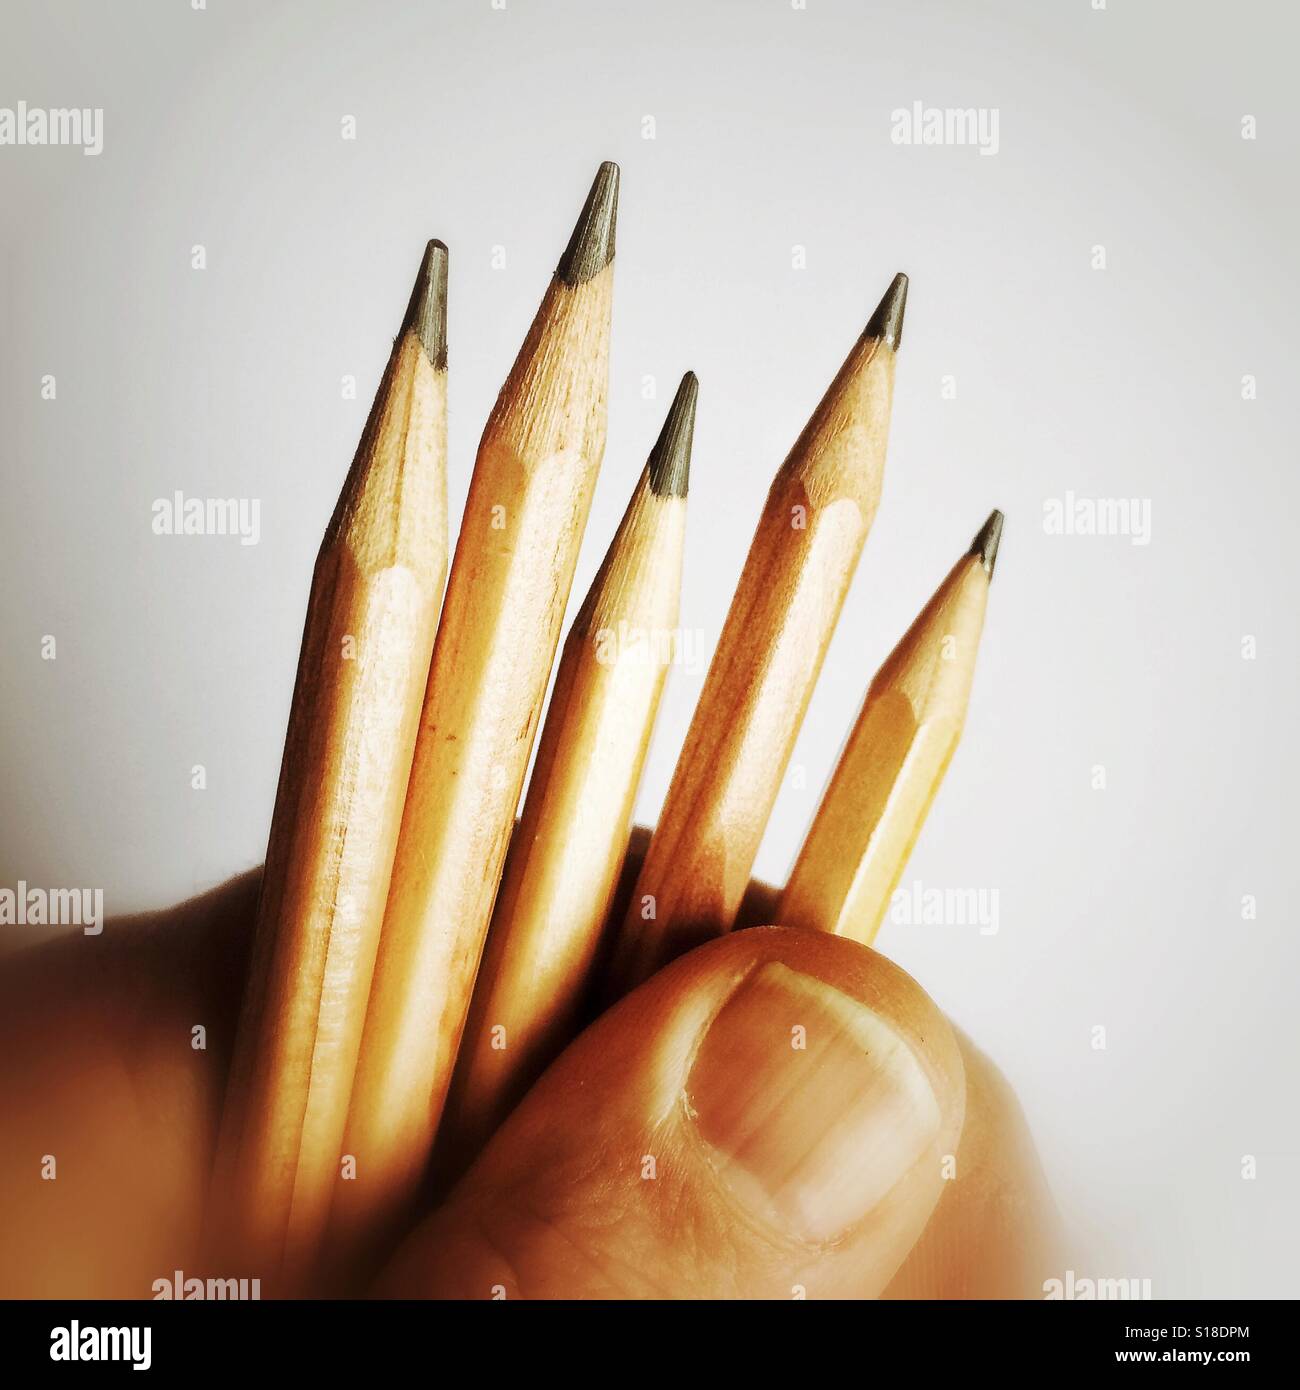 Holding five pencils Stock Photo